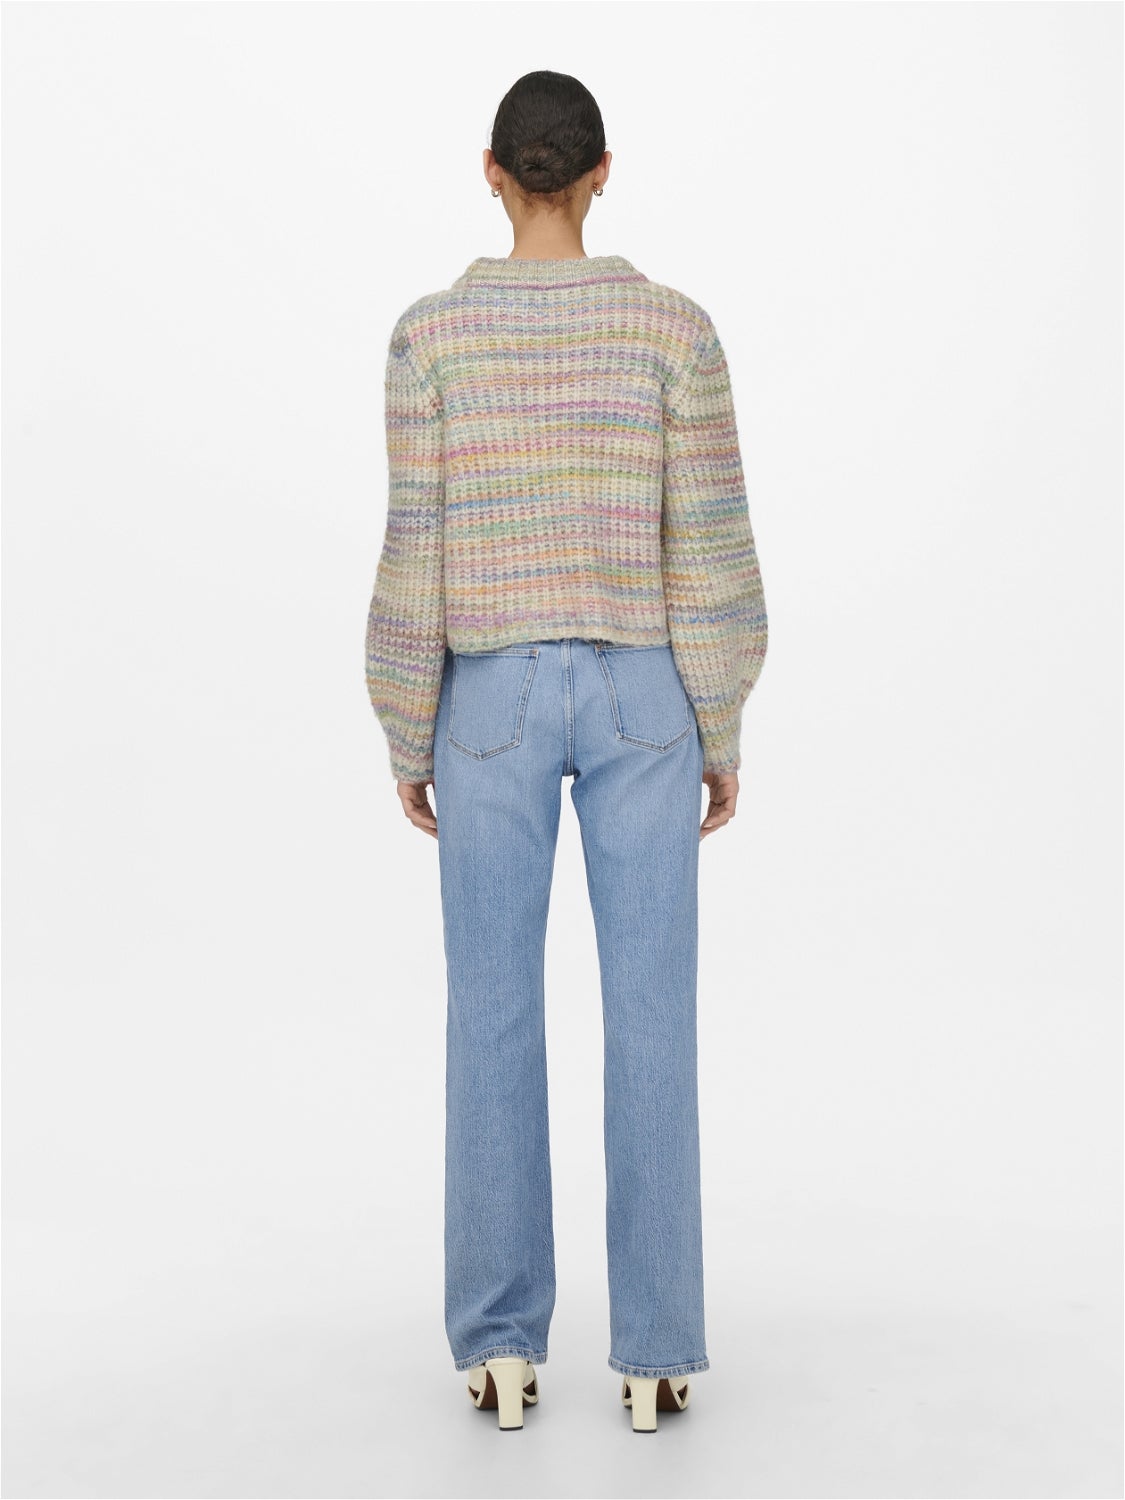 Multi colored Knitted Pullover | Light Grey | ONLY® | Sommerkleider